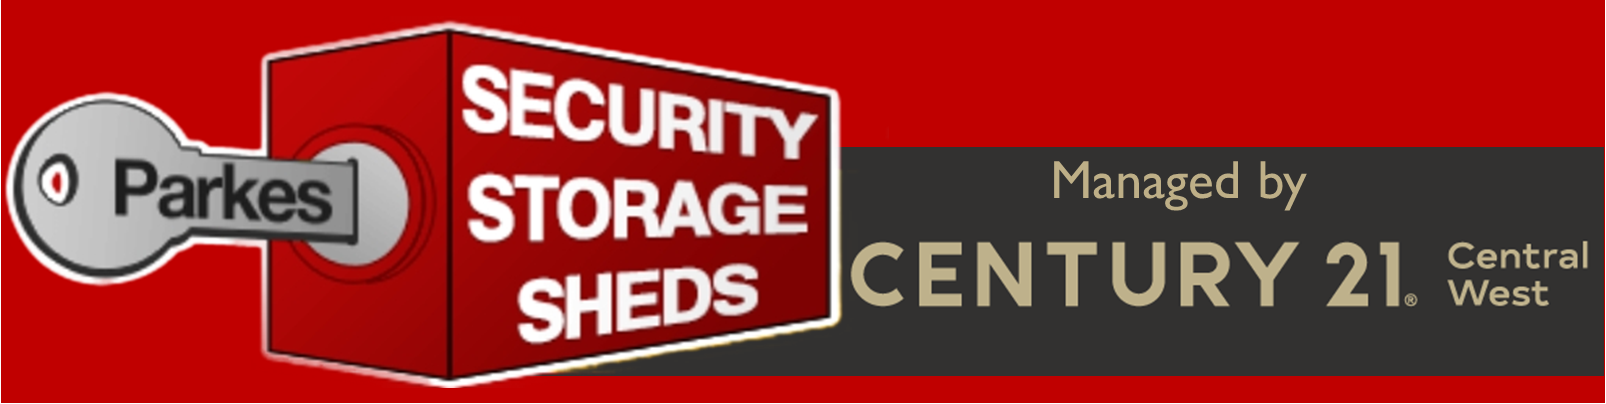 Parkes Security Storage Sheds